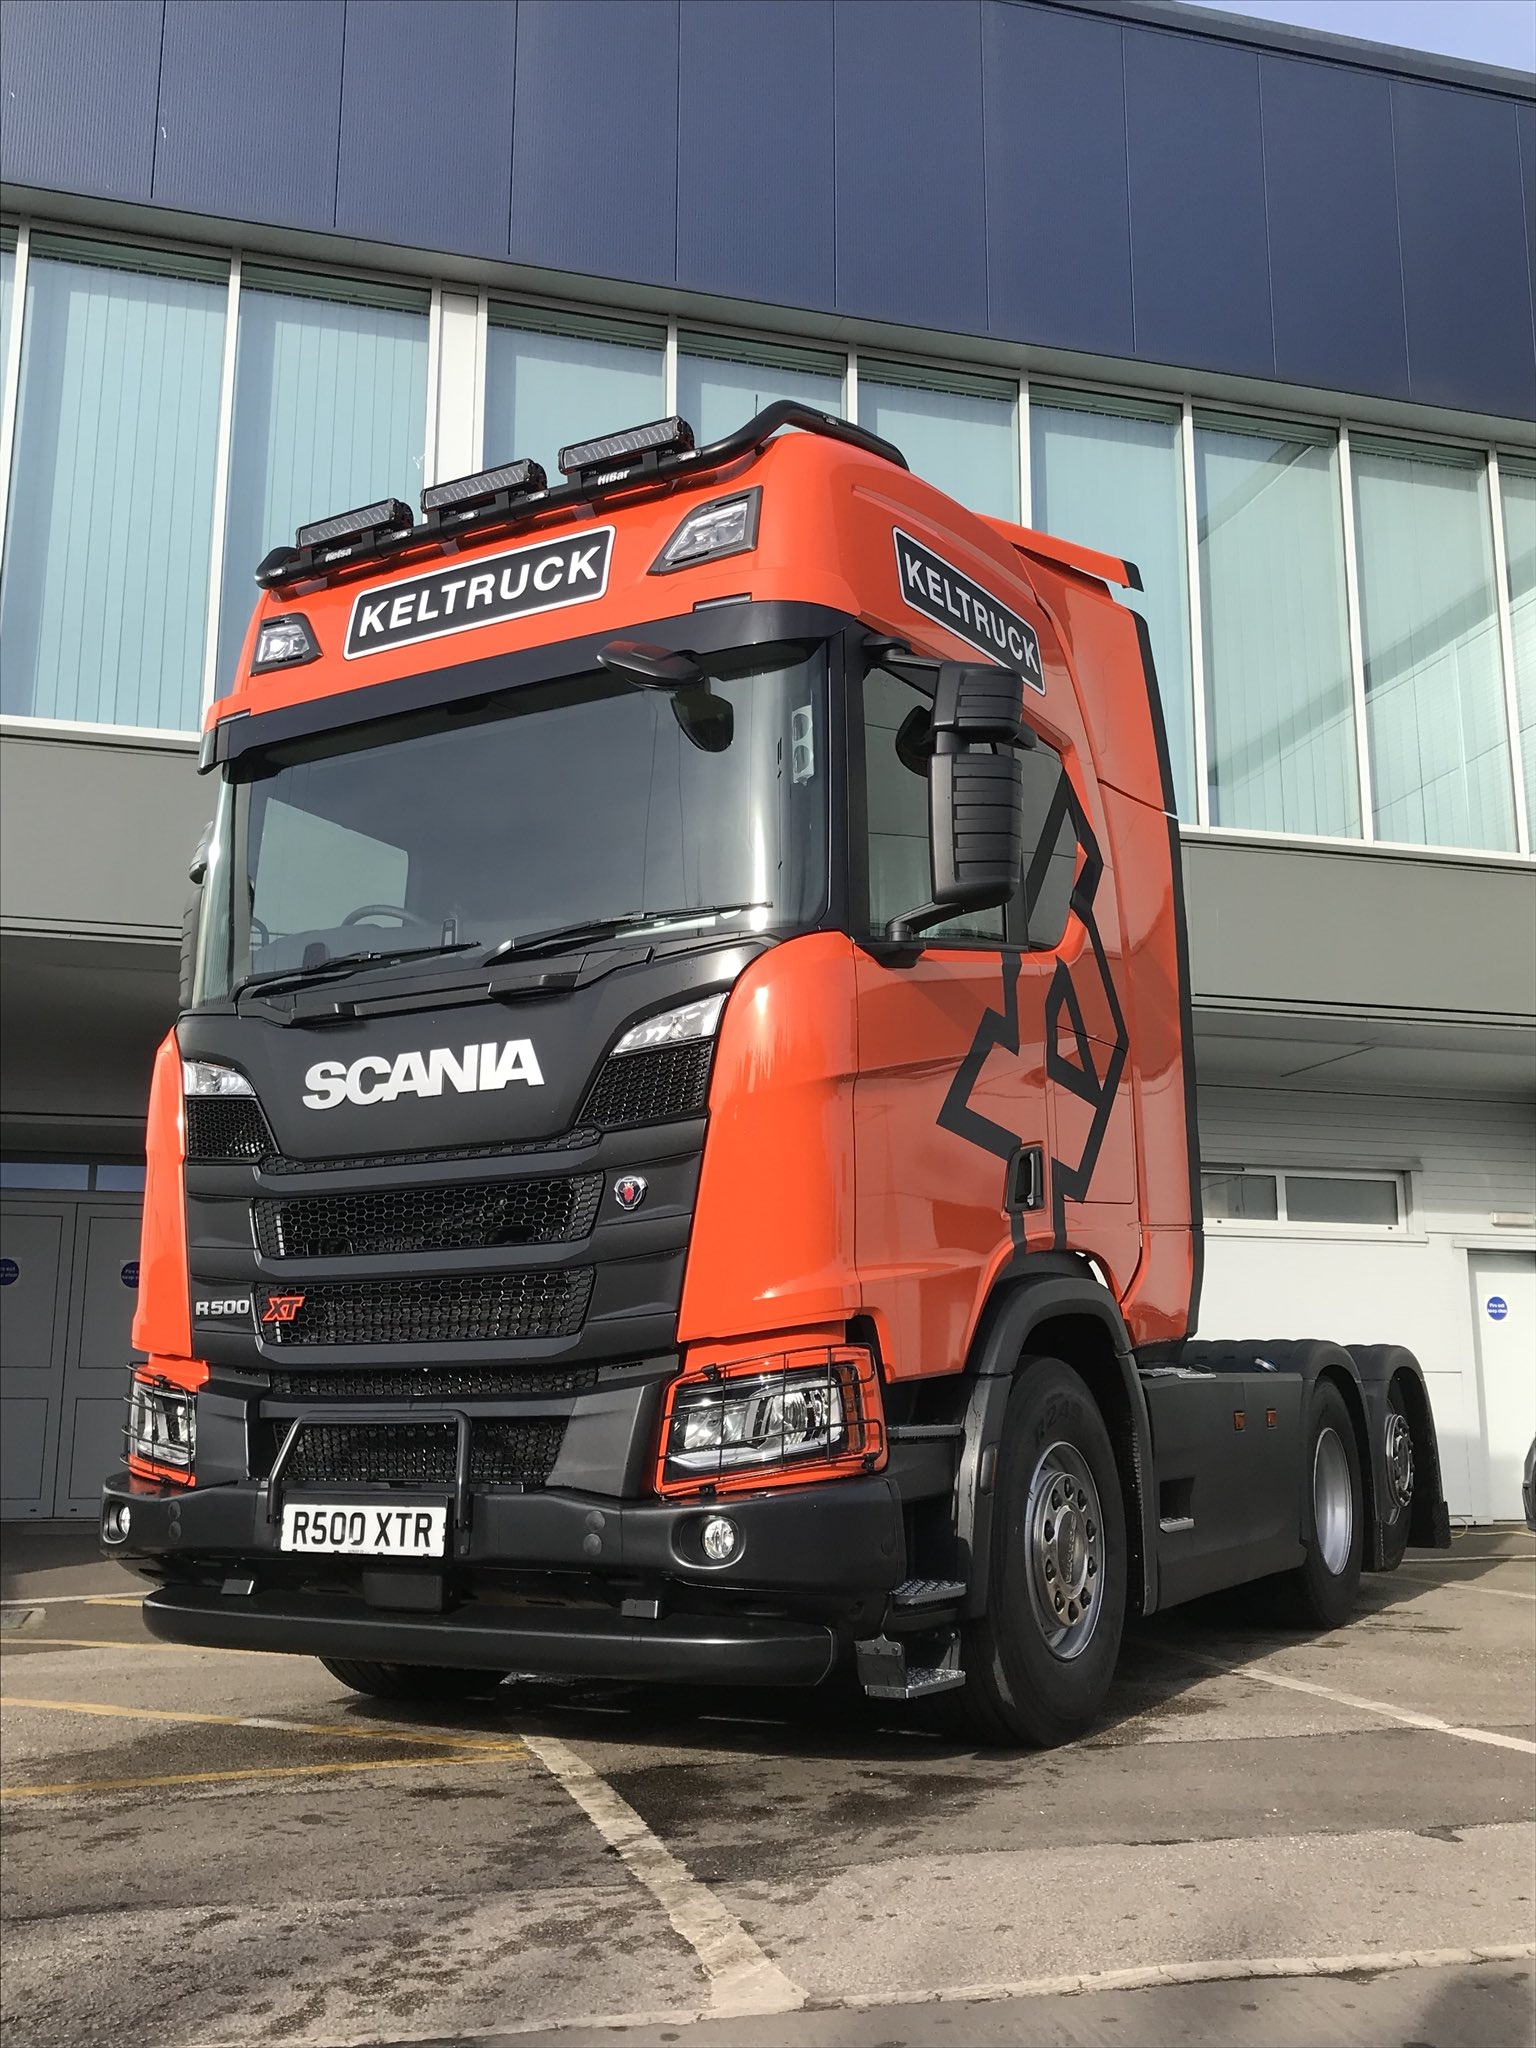 Scania XT - Keltruck Scania 1540x2050